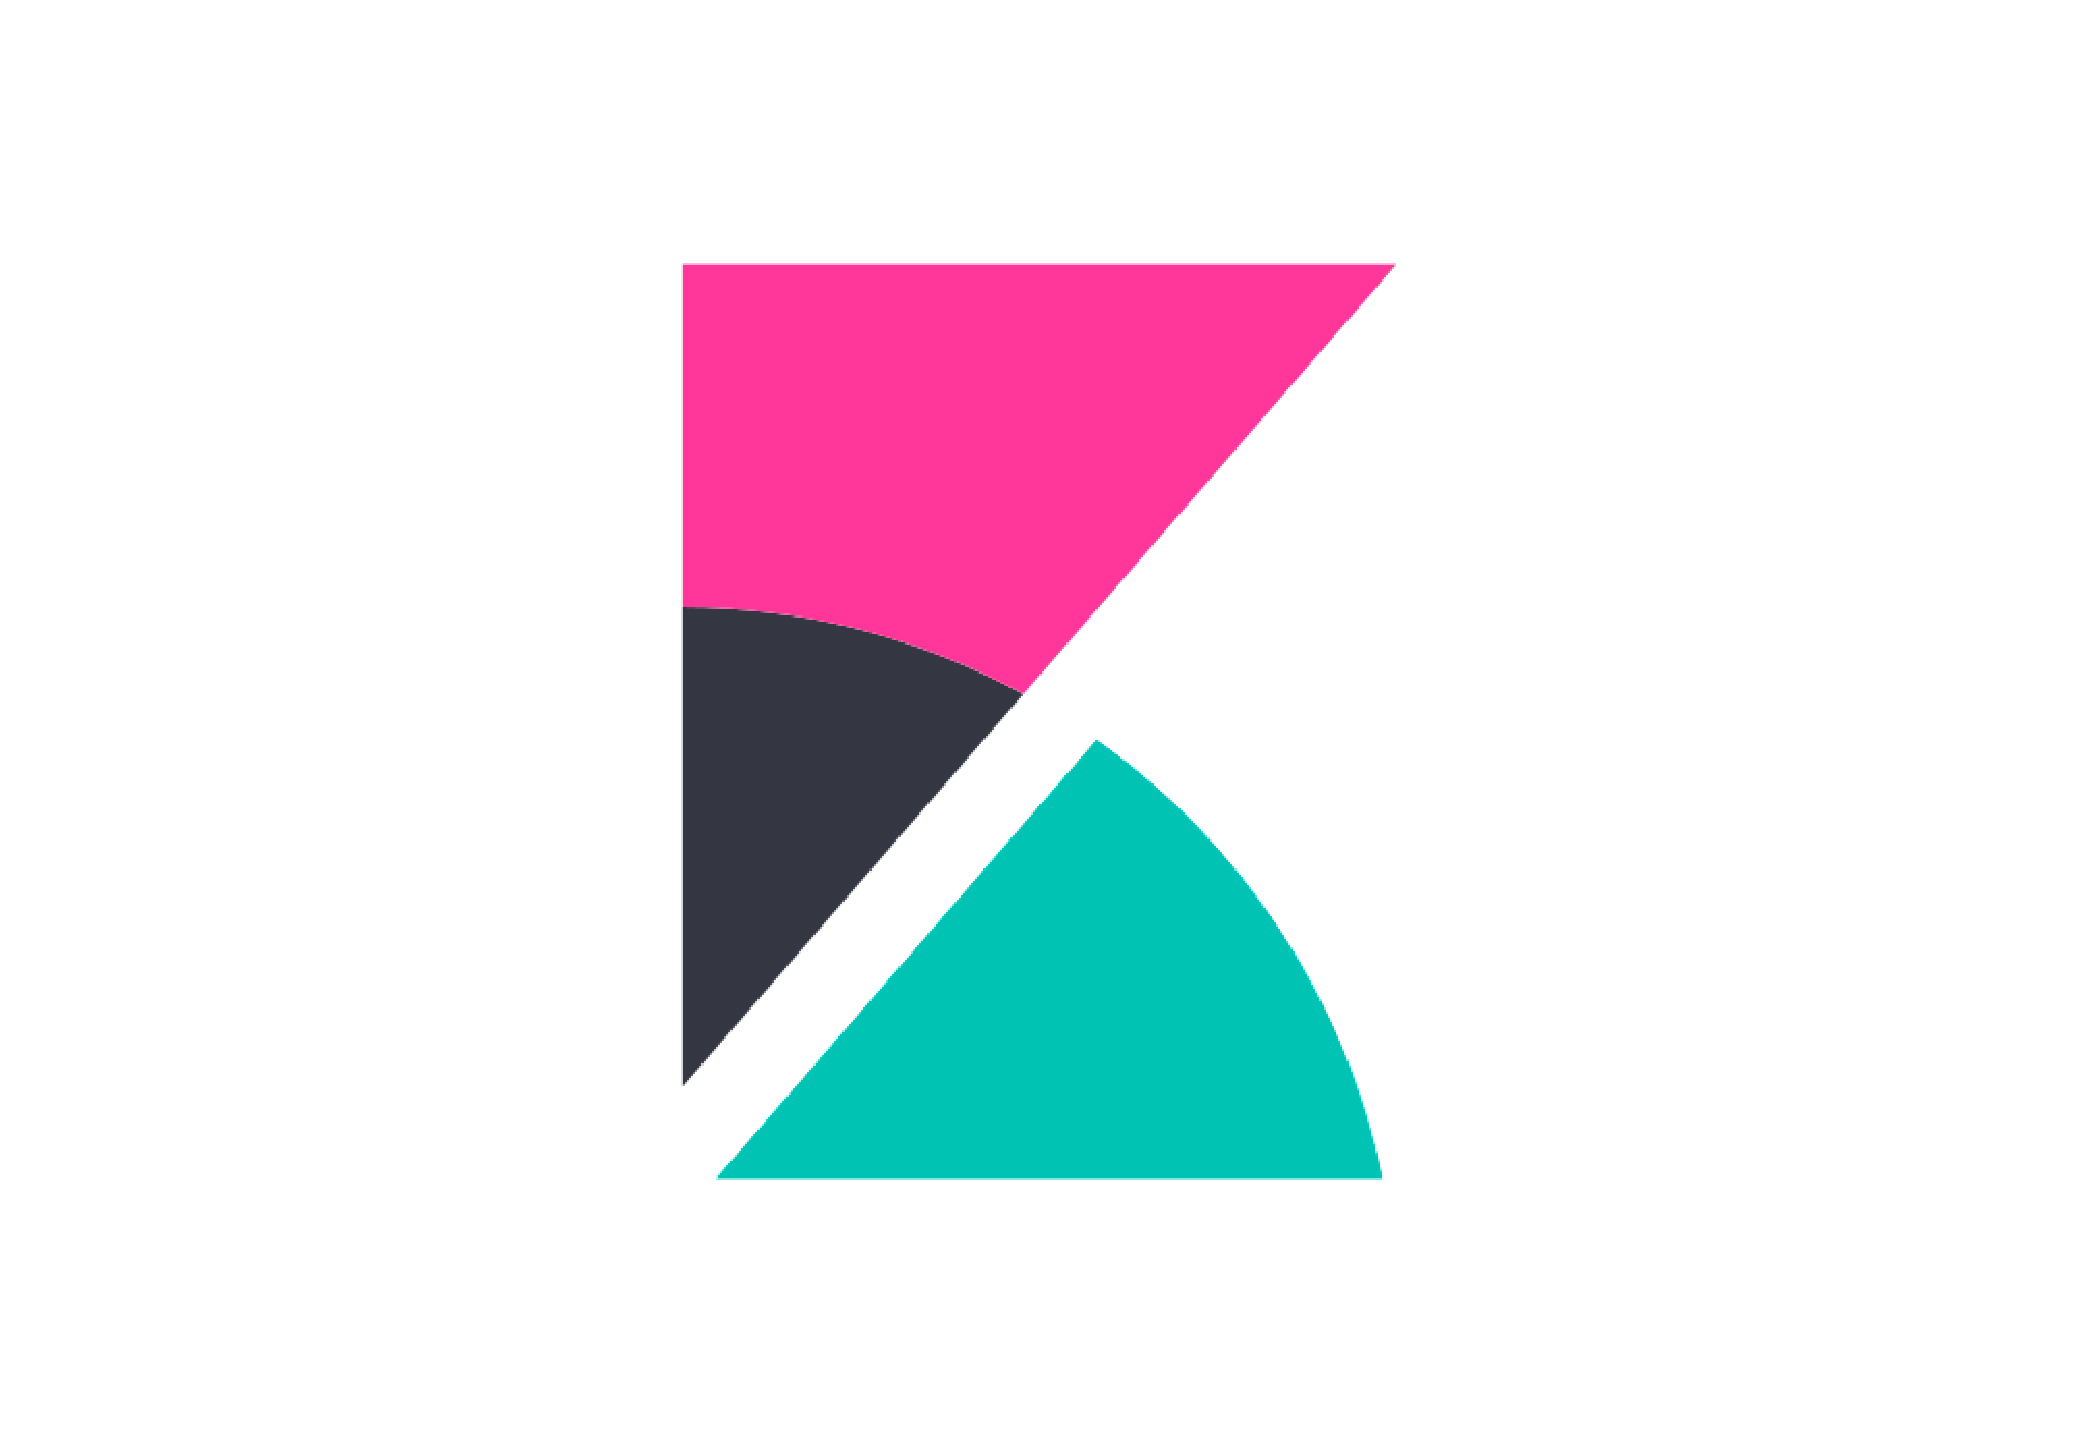 ELK Kibana logo